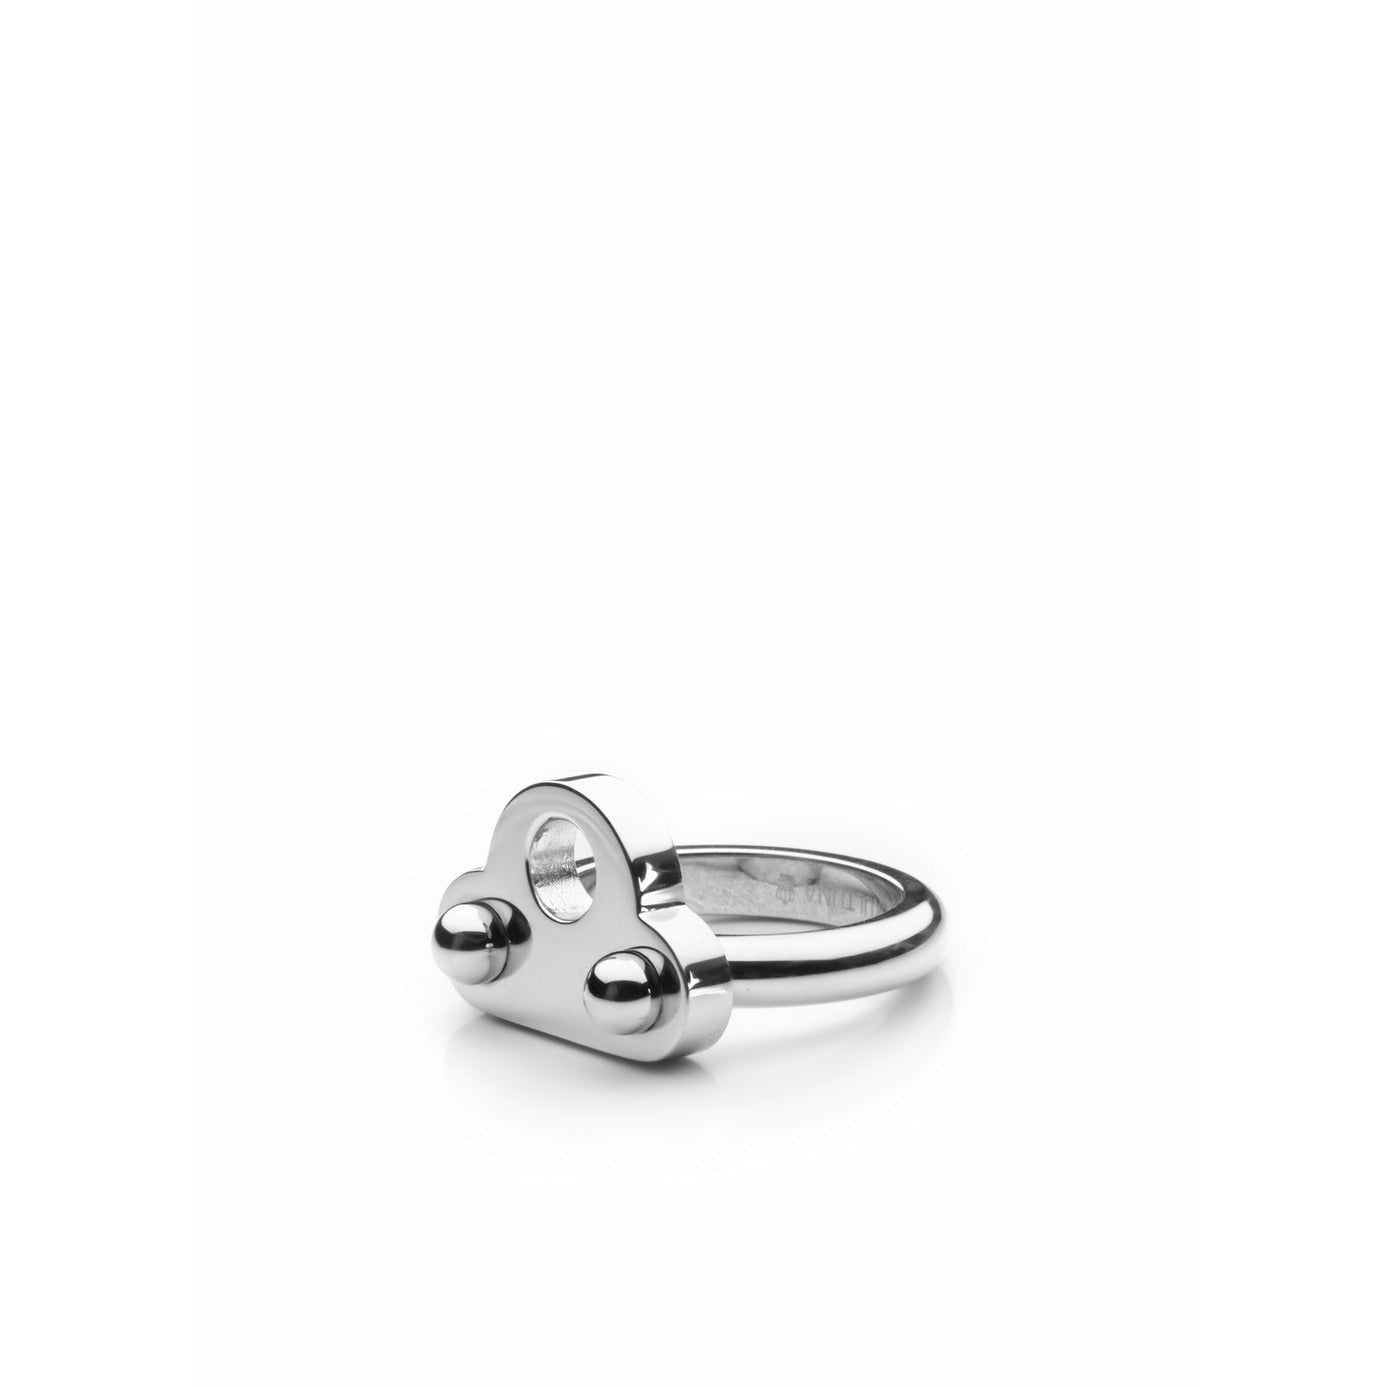 Skultuna Key Ring Ring de acero pulido grande, Ø1,97 cm